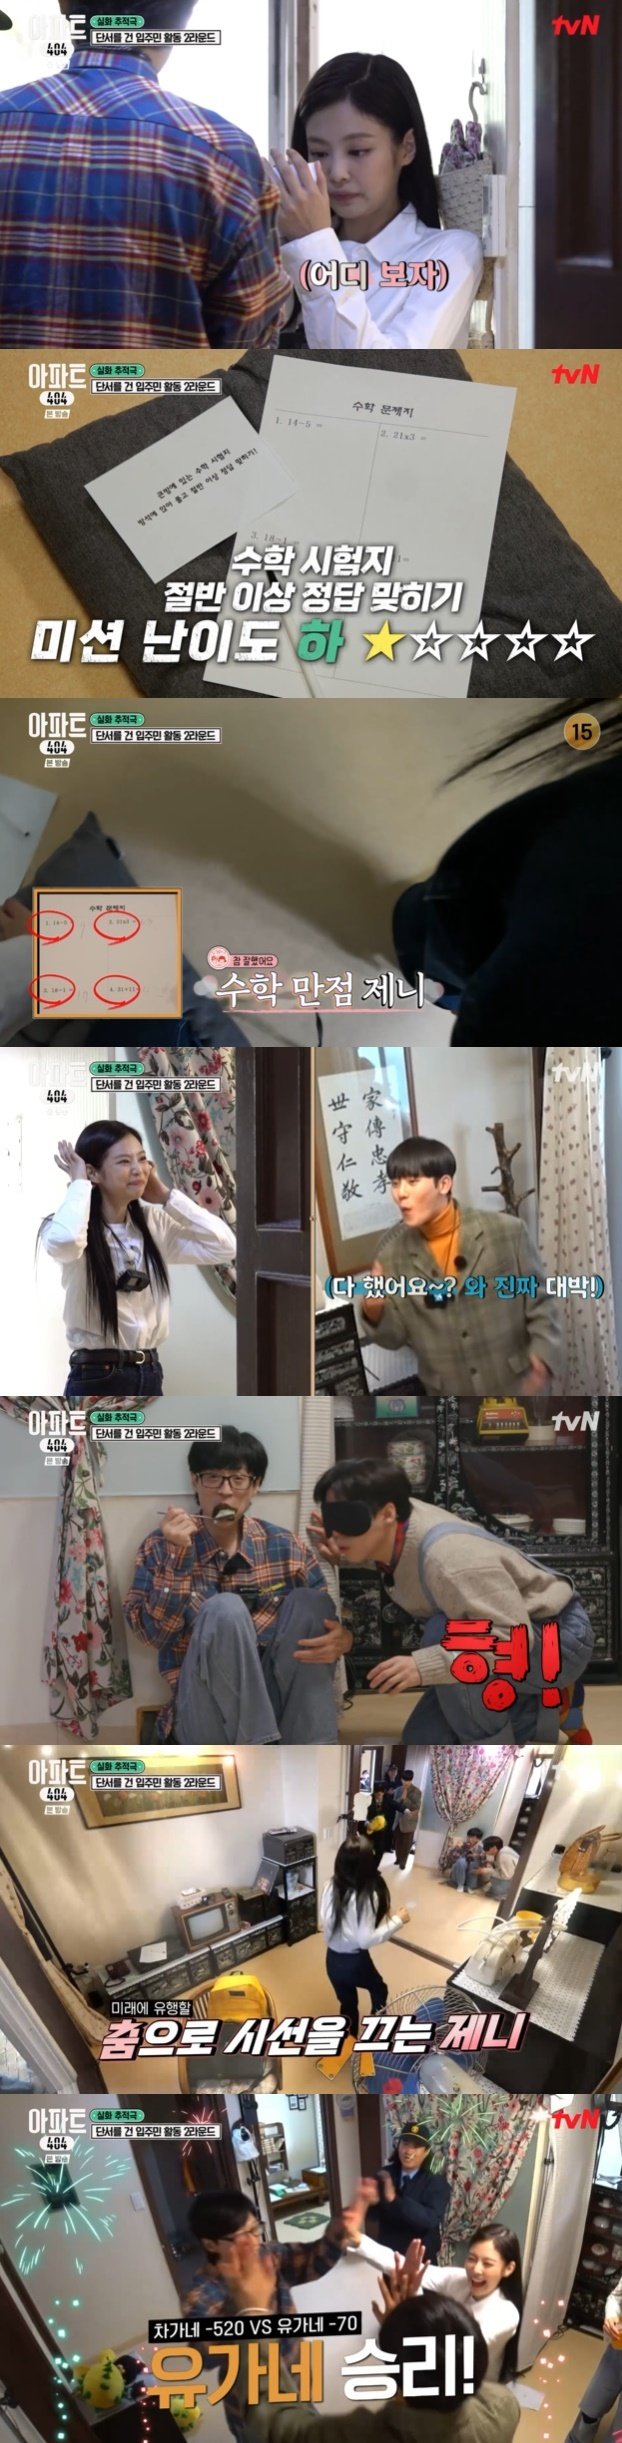 tvN '아파트404' 캡처